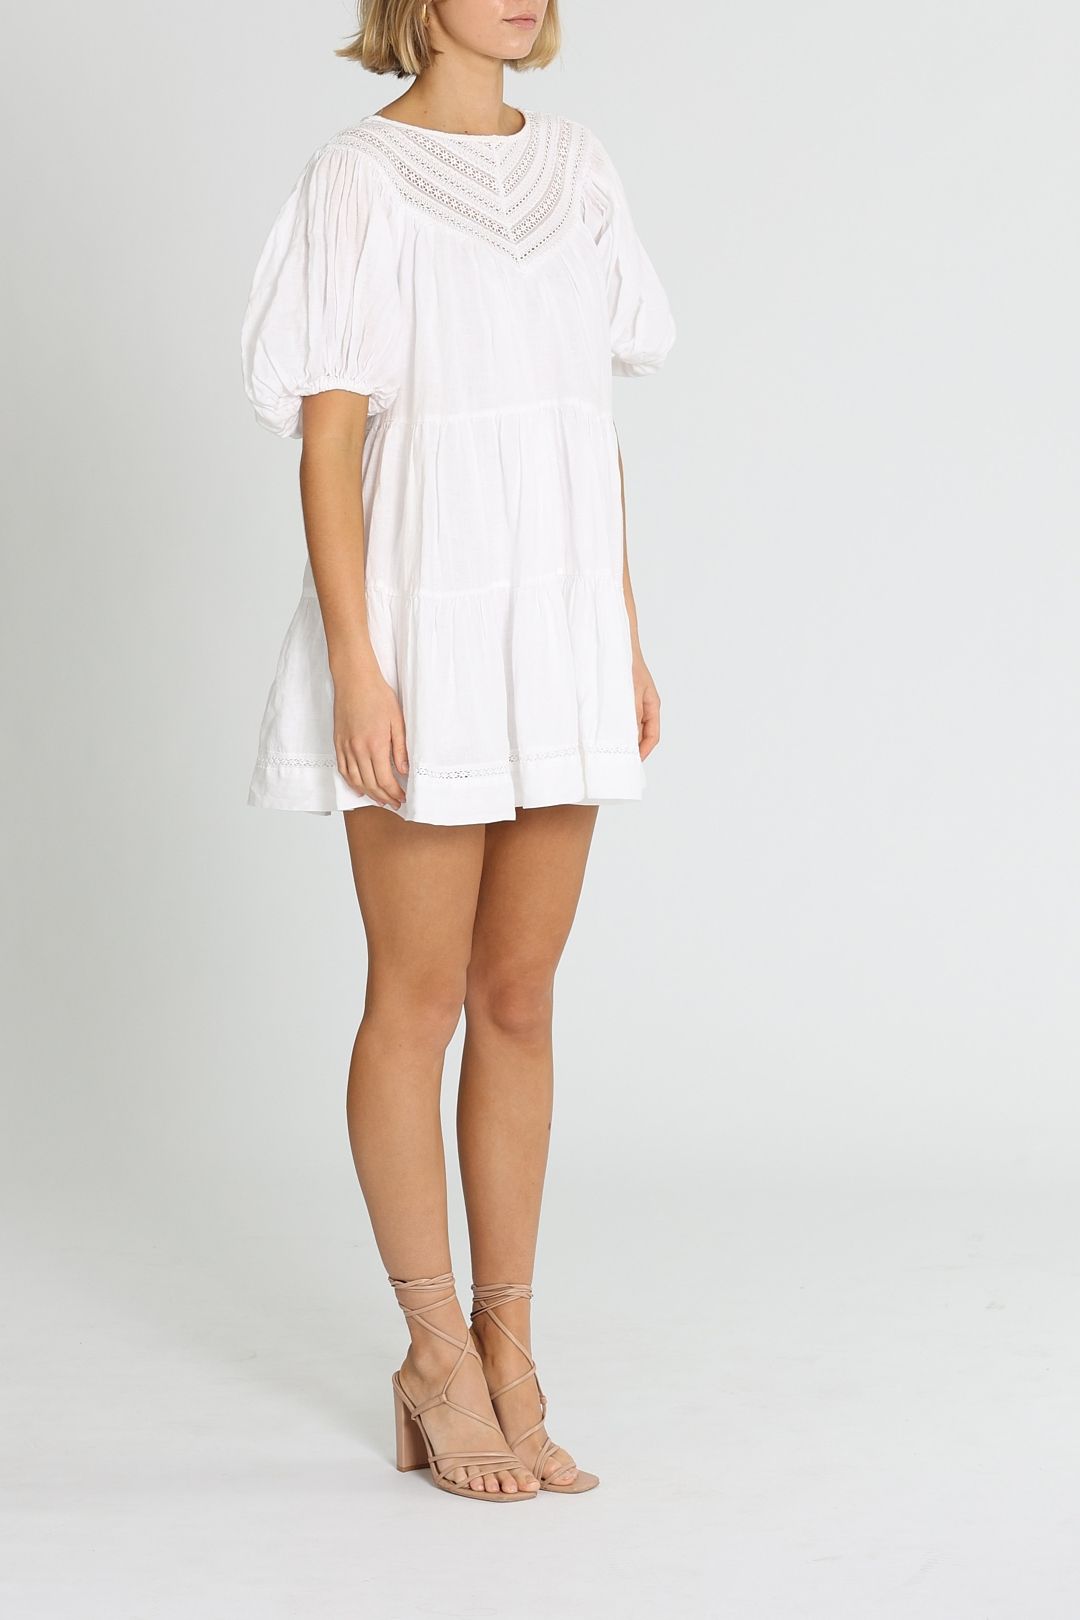 Shona Joy Adriana Mini Dress White Puff Sleeves